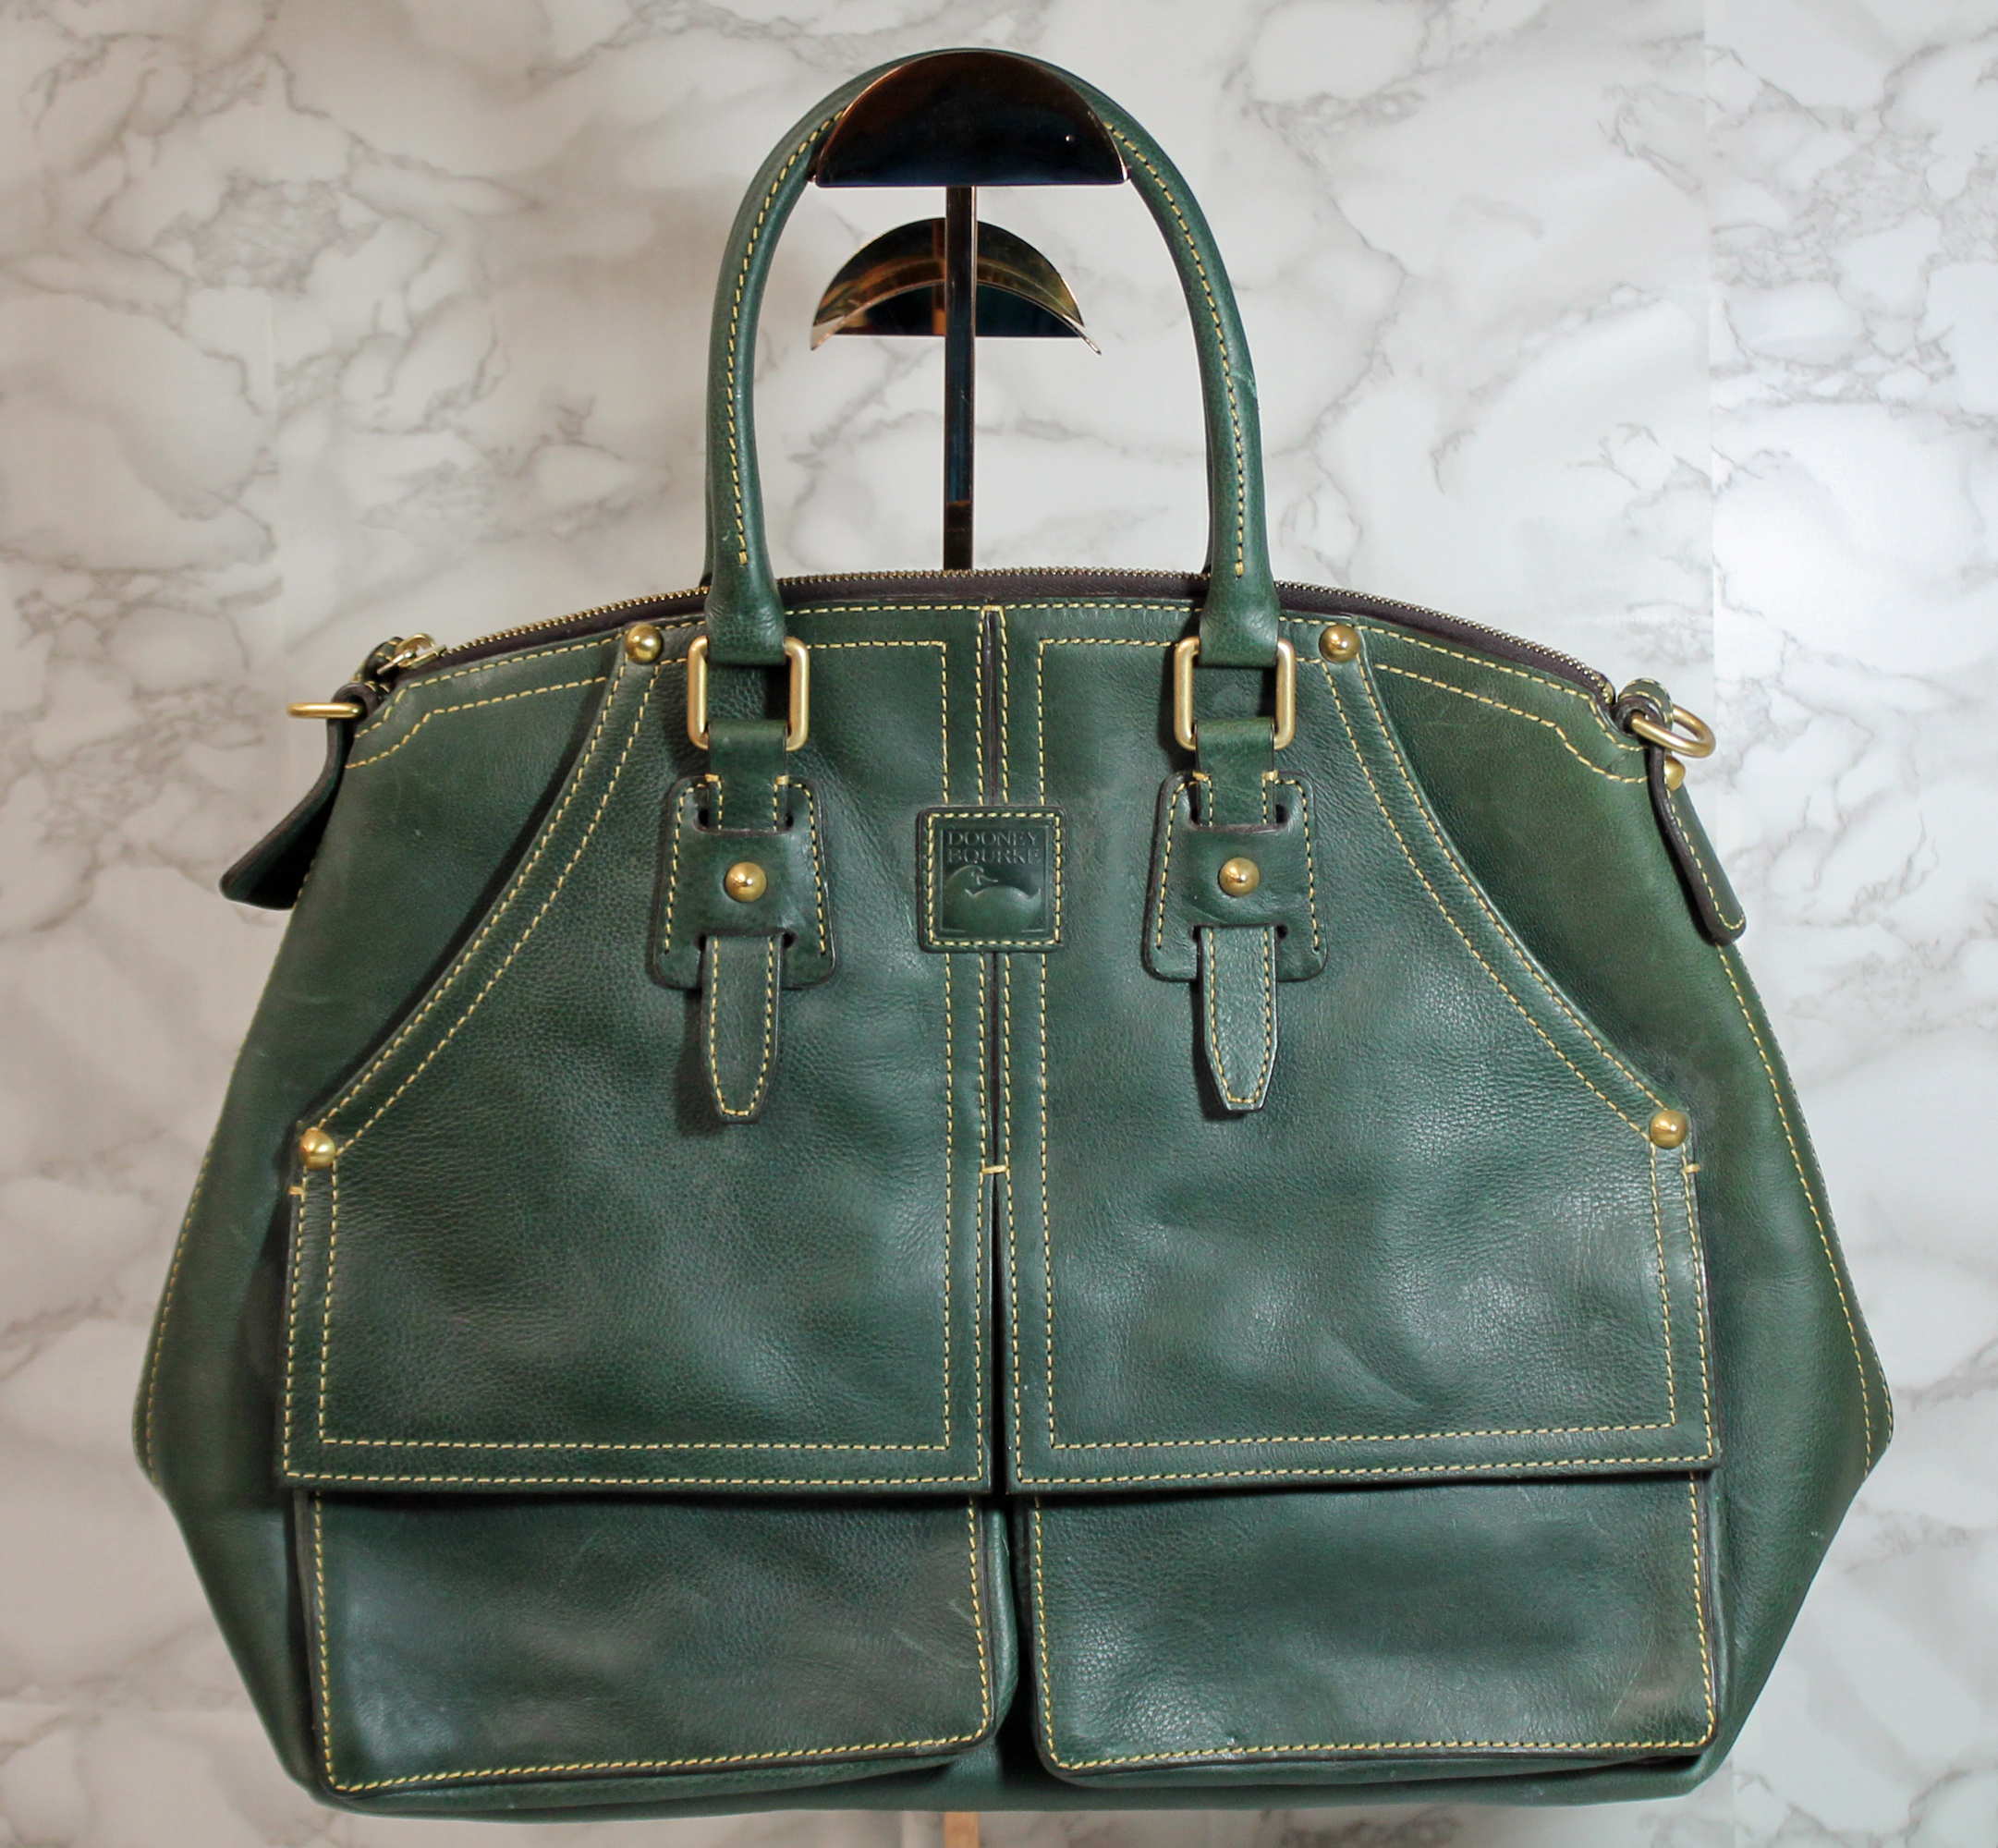 used dooney and bourke handbags for sale on ebay